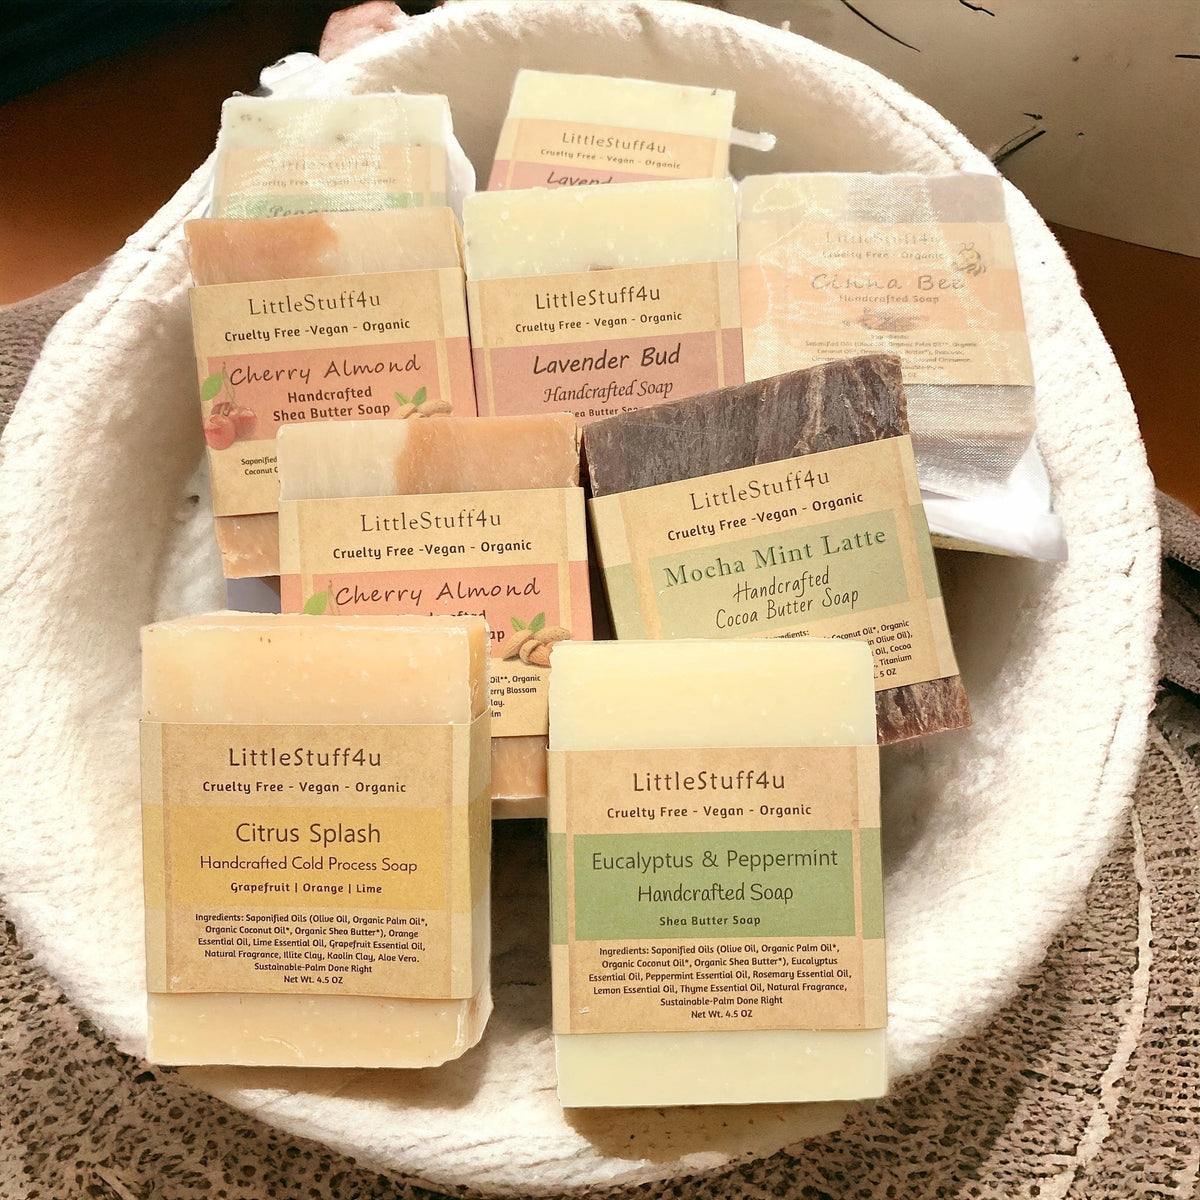 Cinnabee Natural Soap